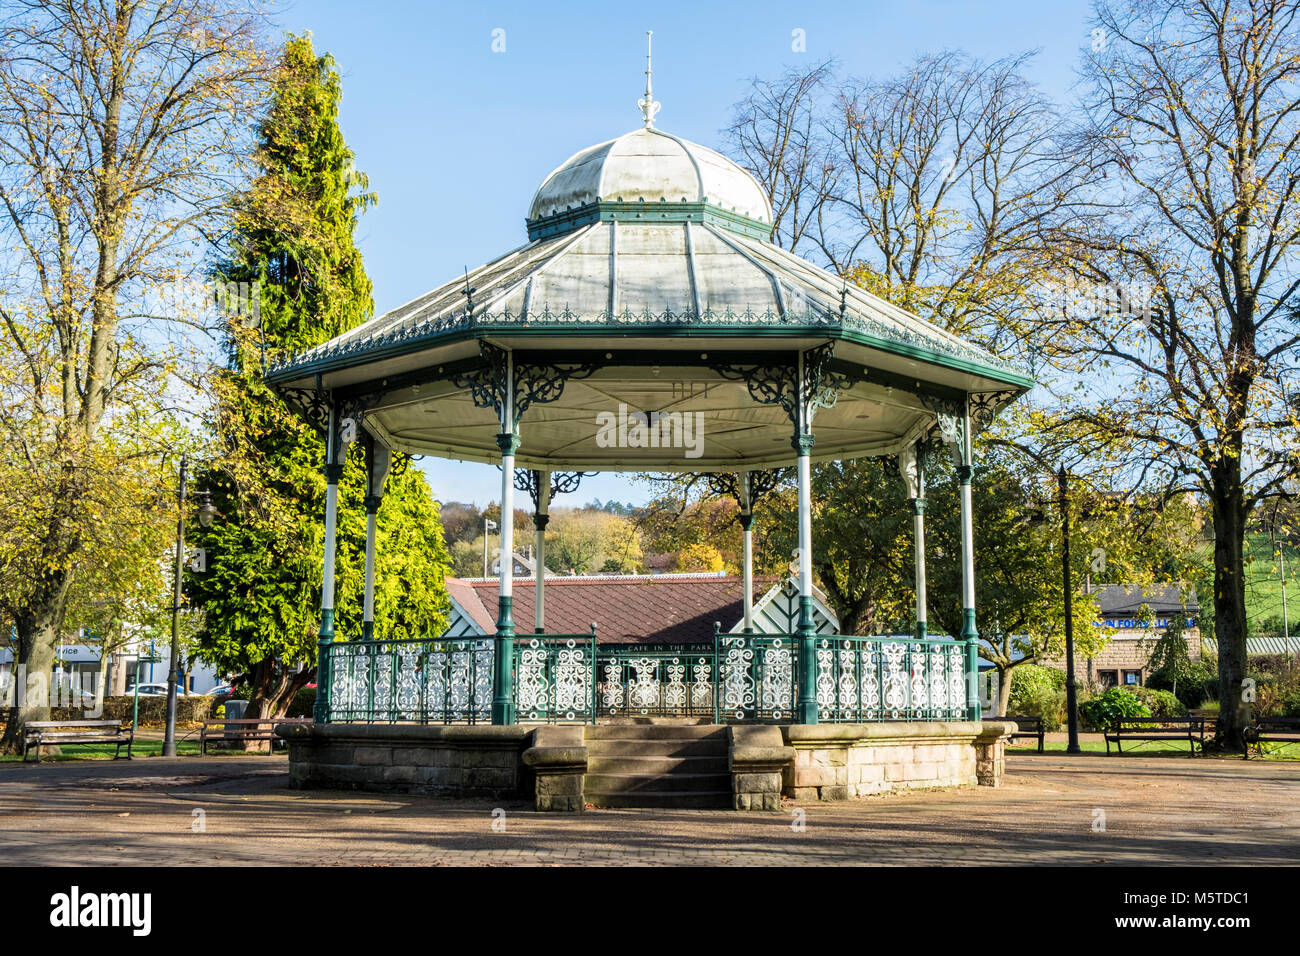 Bandstand, Hall Leys Park, Matlock, Derbyshire, England, UK Stock Photo